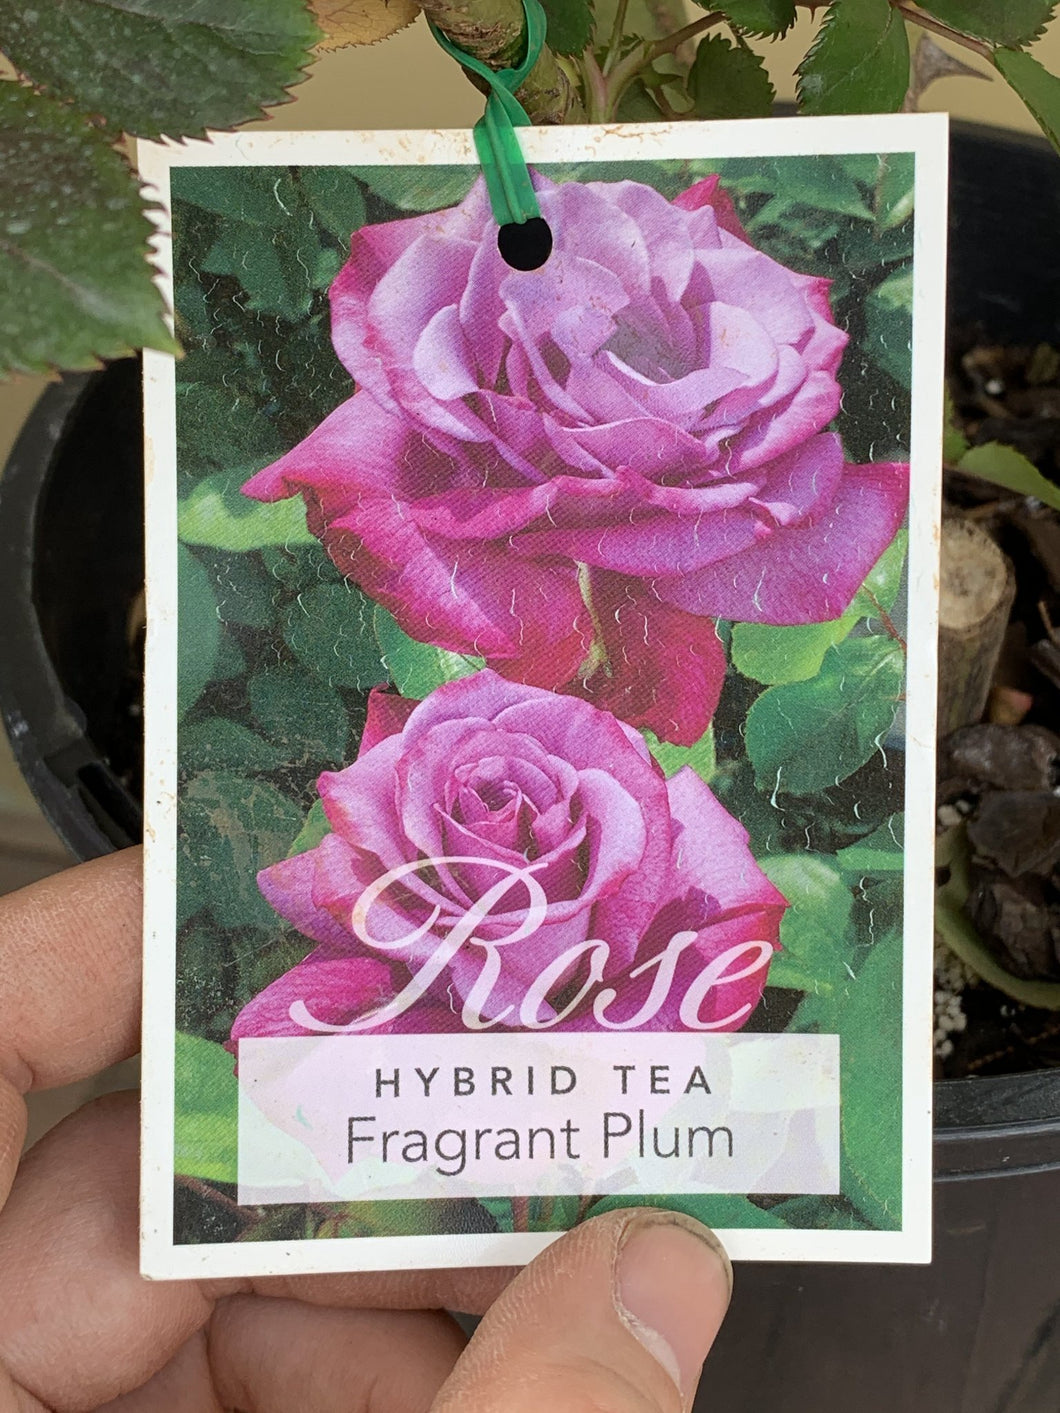 Rose - Hybrid Tea 'Fragrant Plum'